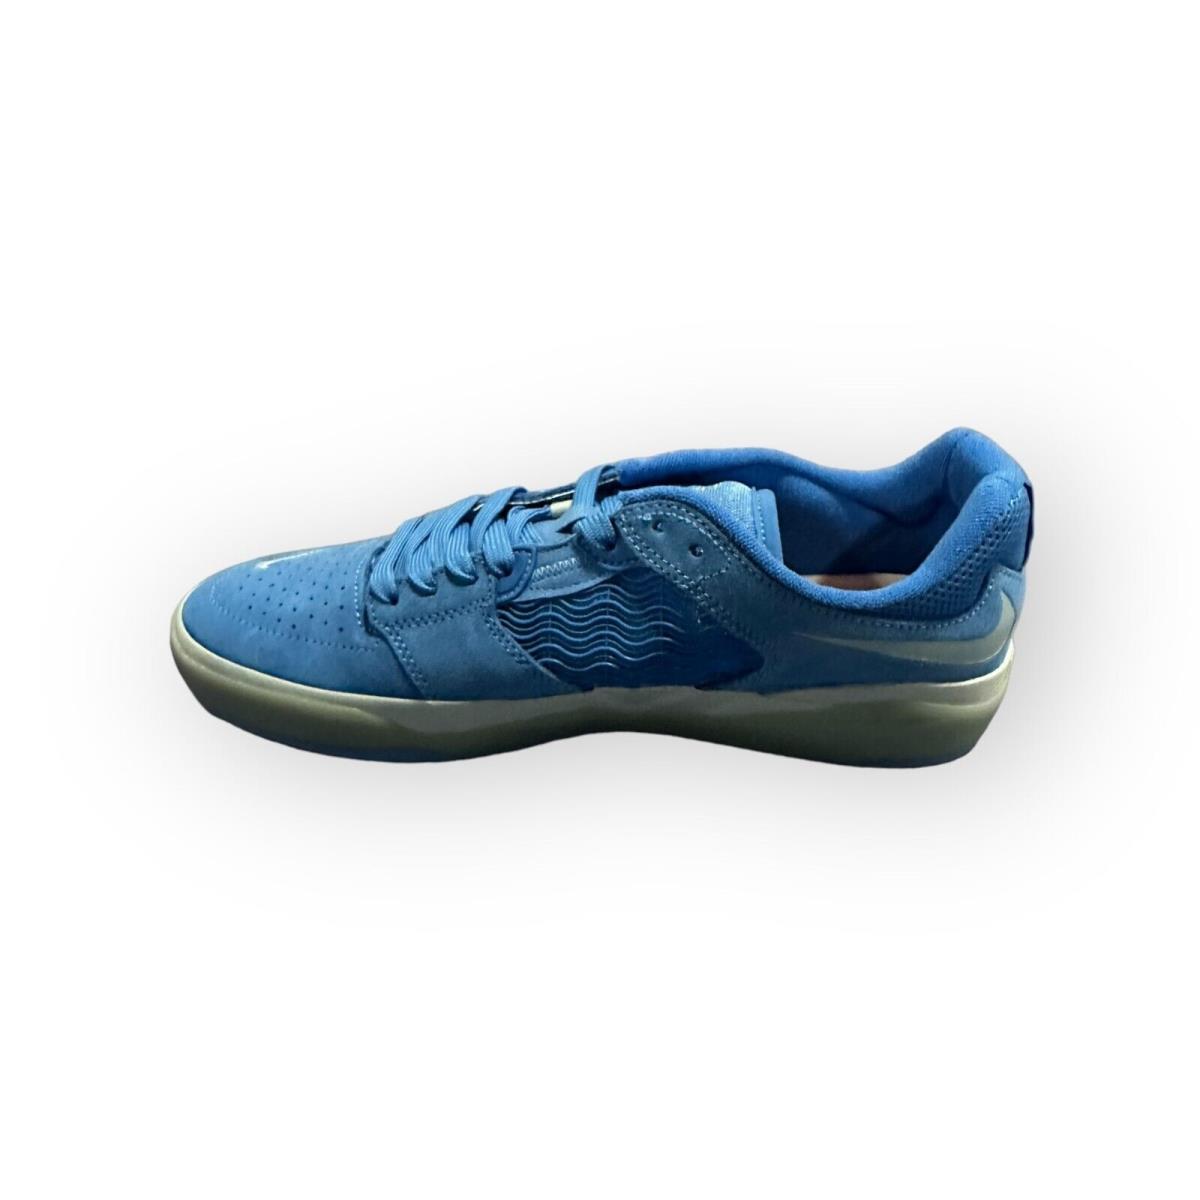 Nike SB Ishod Wair Pacific Blue Skateboarding Shoes Mens Size 9.5 DC7232-401